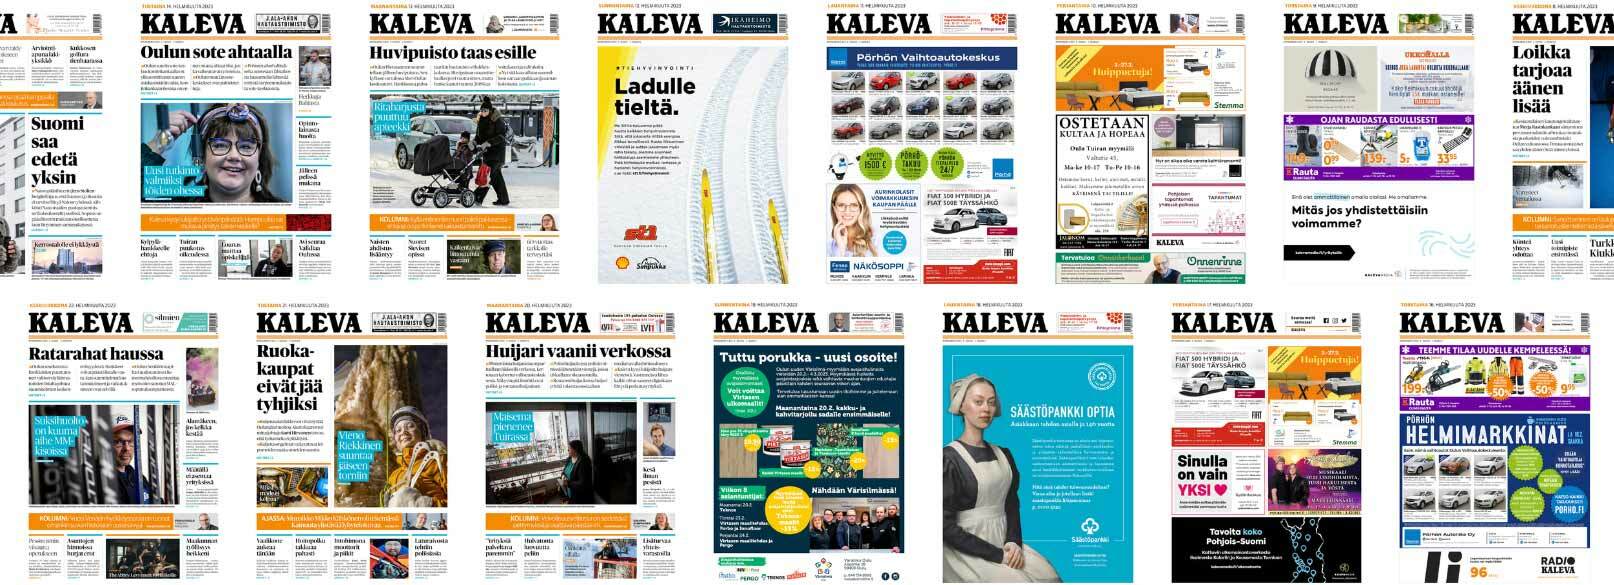 Kaleva newspapers banner